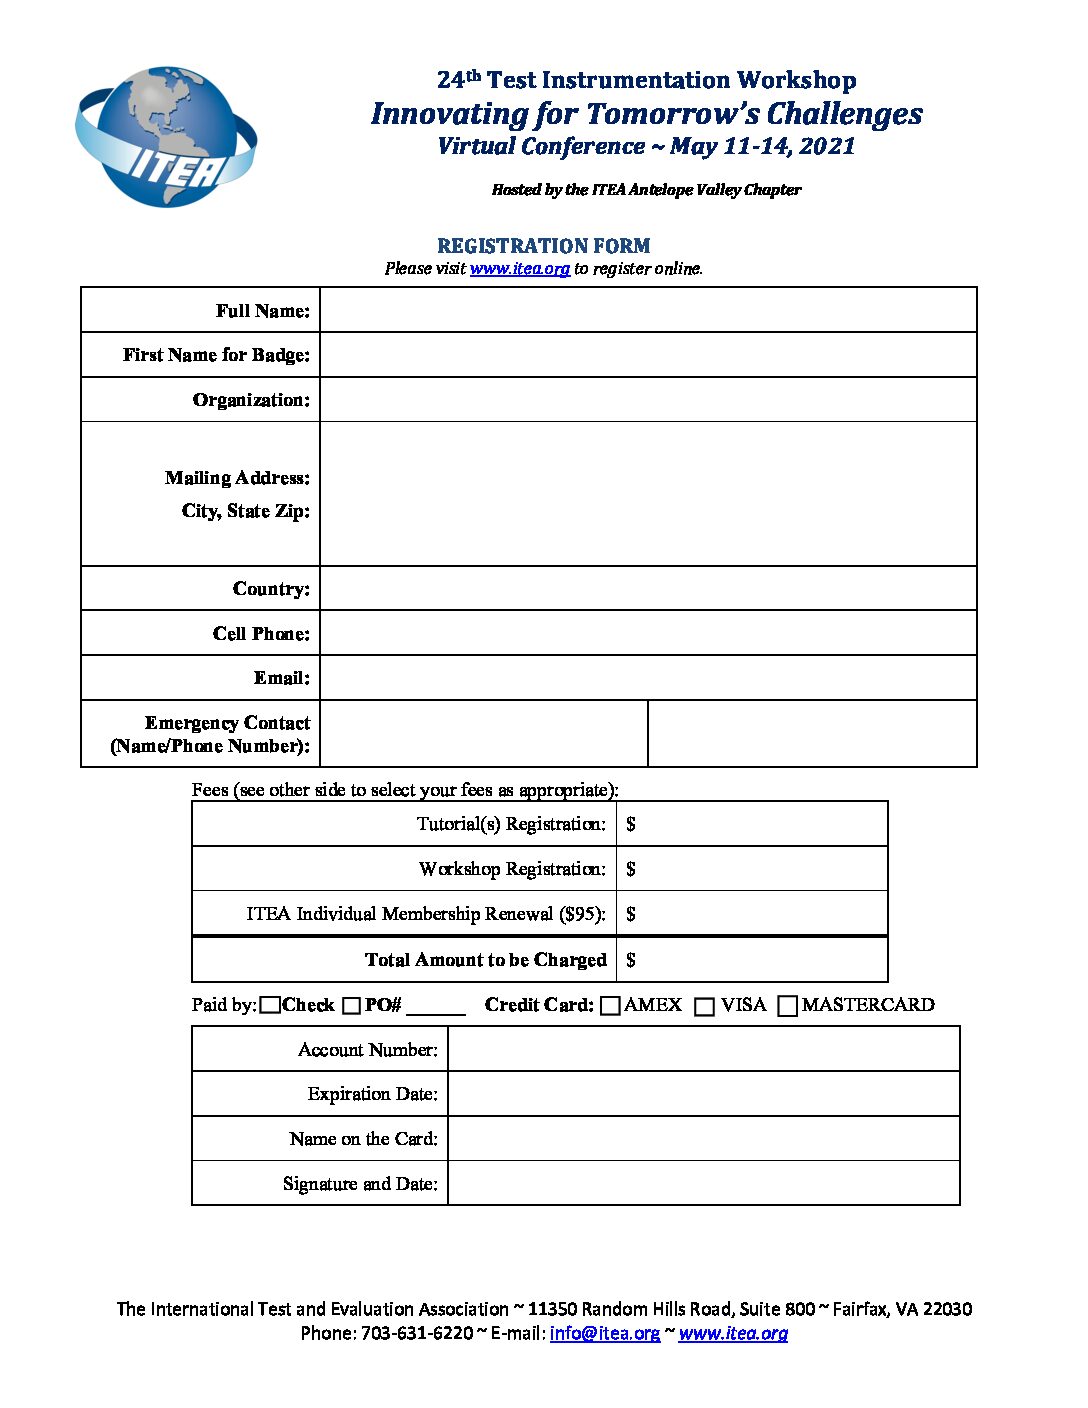 2021 TIW Registration Form